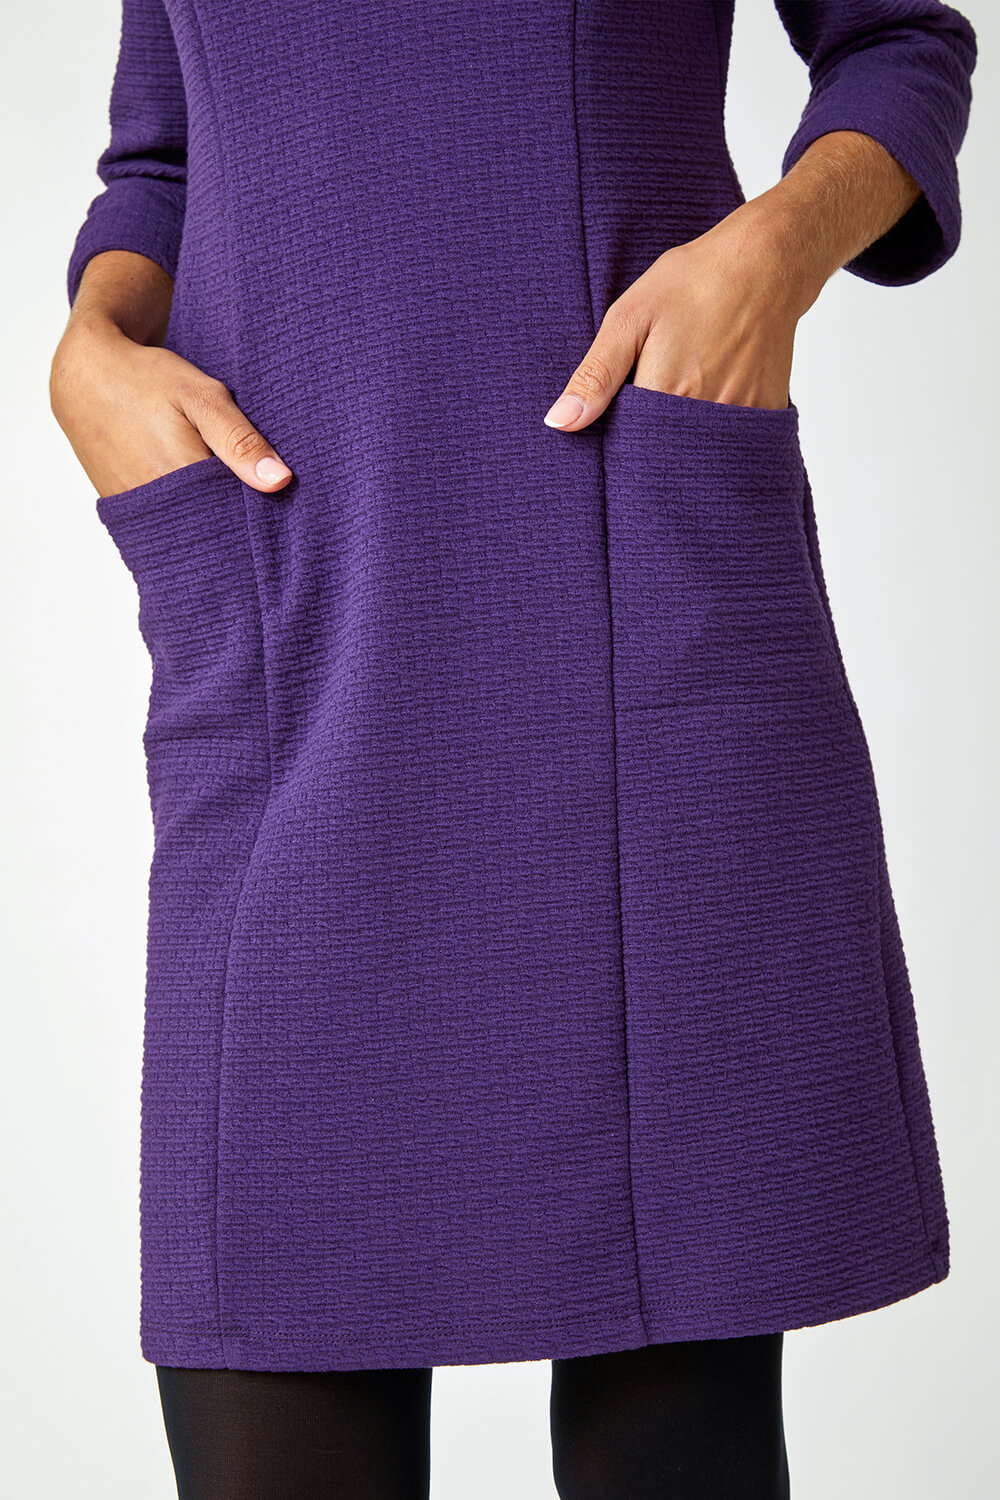 Purple Textured Cotton Blend Shift Stretch Dress, Image 5 of 5